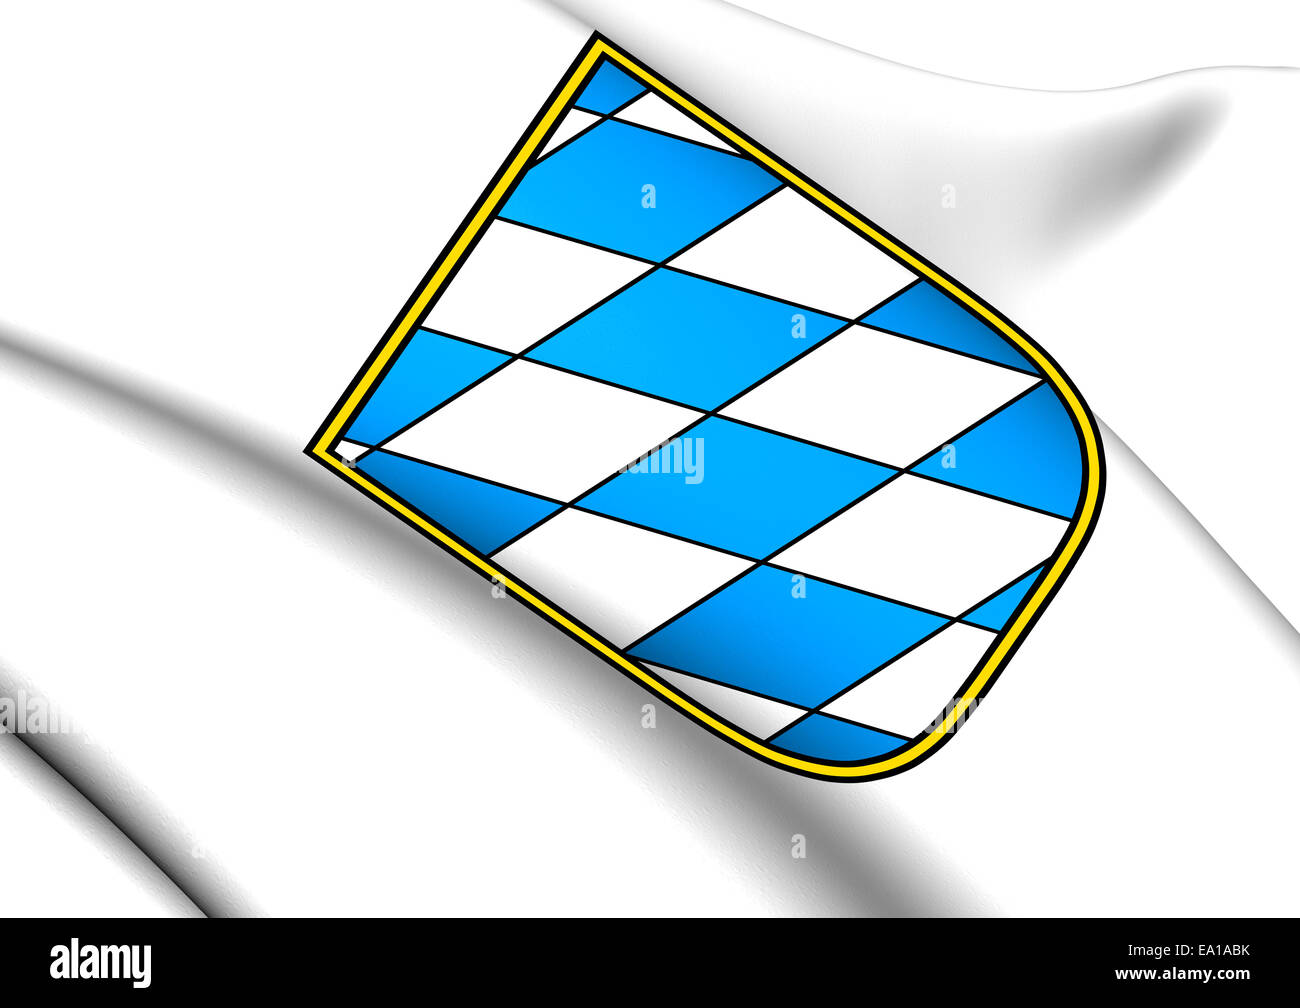 Bavaria Coat of Arms Stock Photo